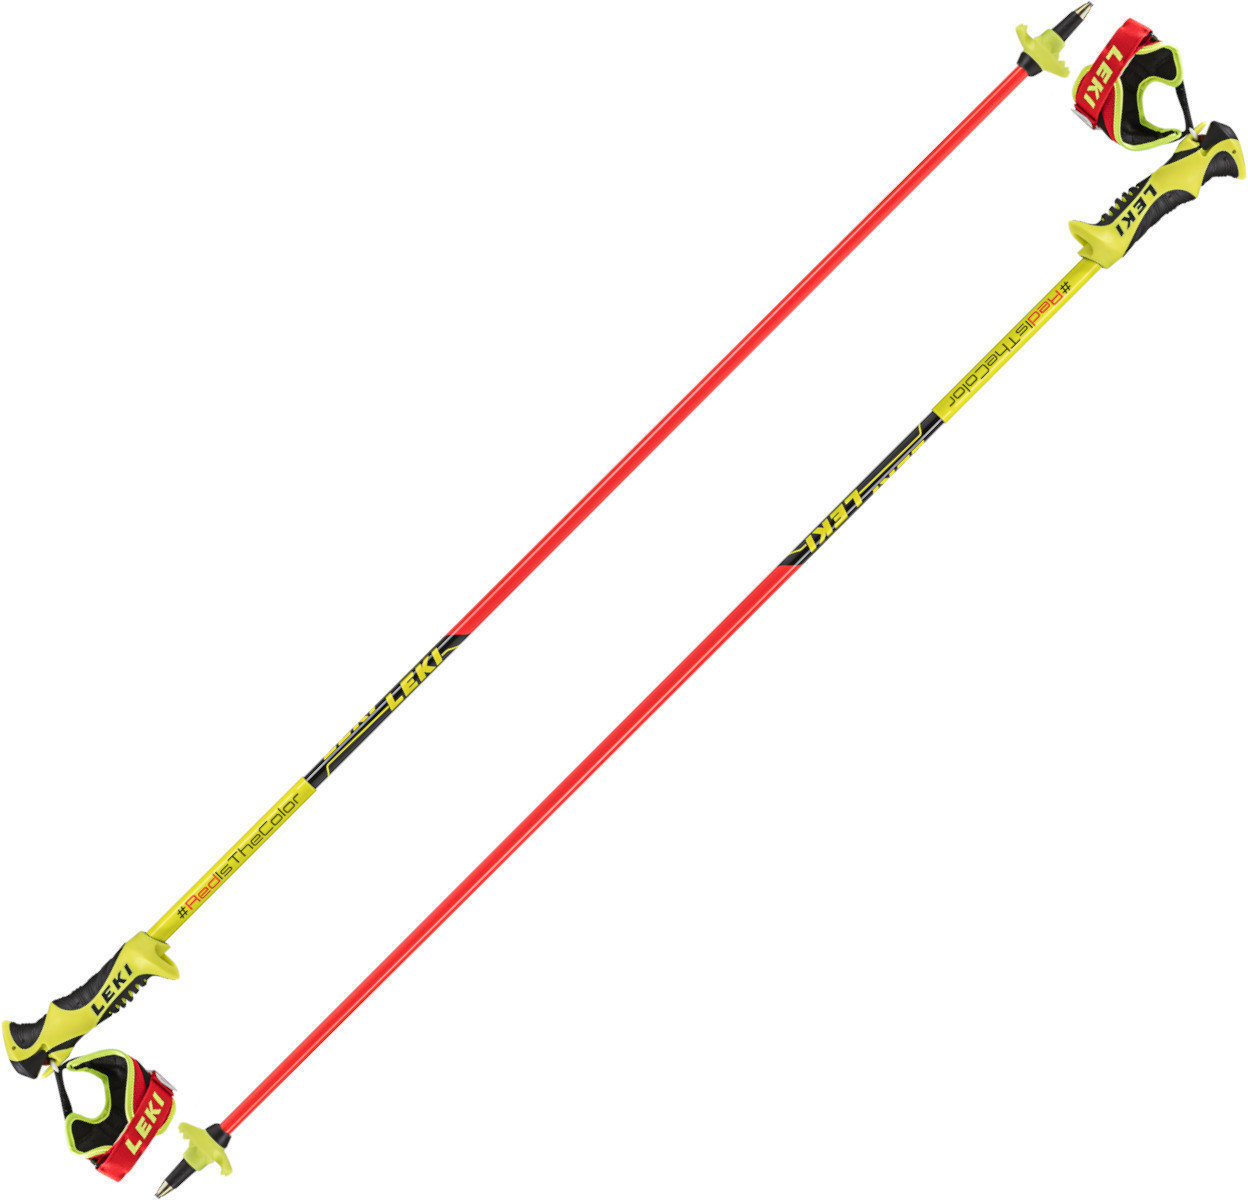 Ski Poles Leki Worldcup Racing Comp JR Neonred/Neonyellow/Black 120 cm Ski Poles